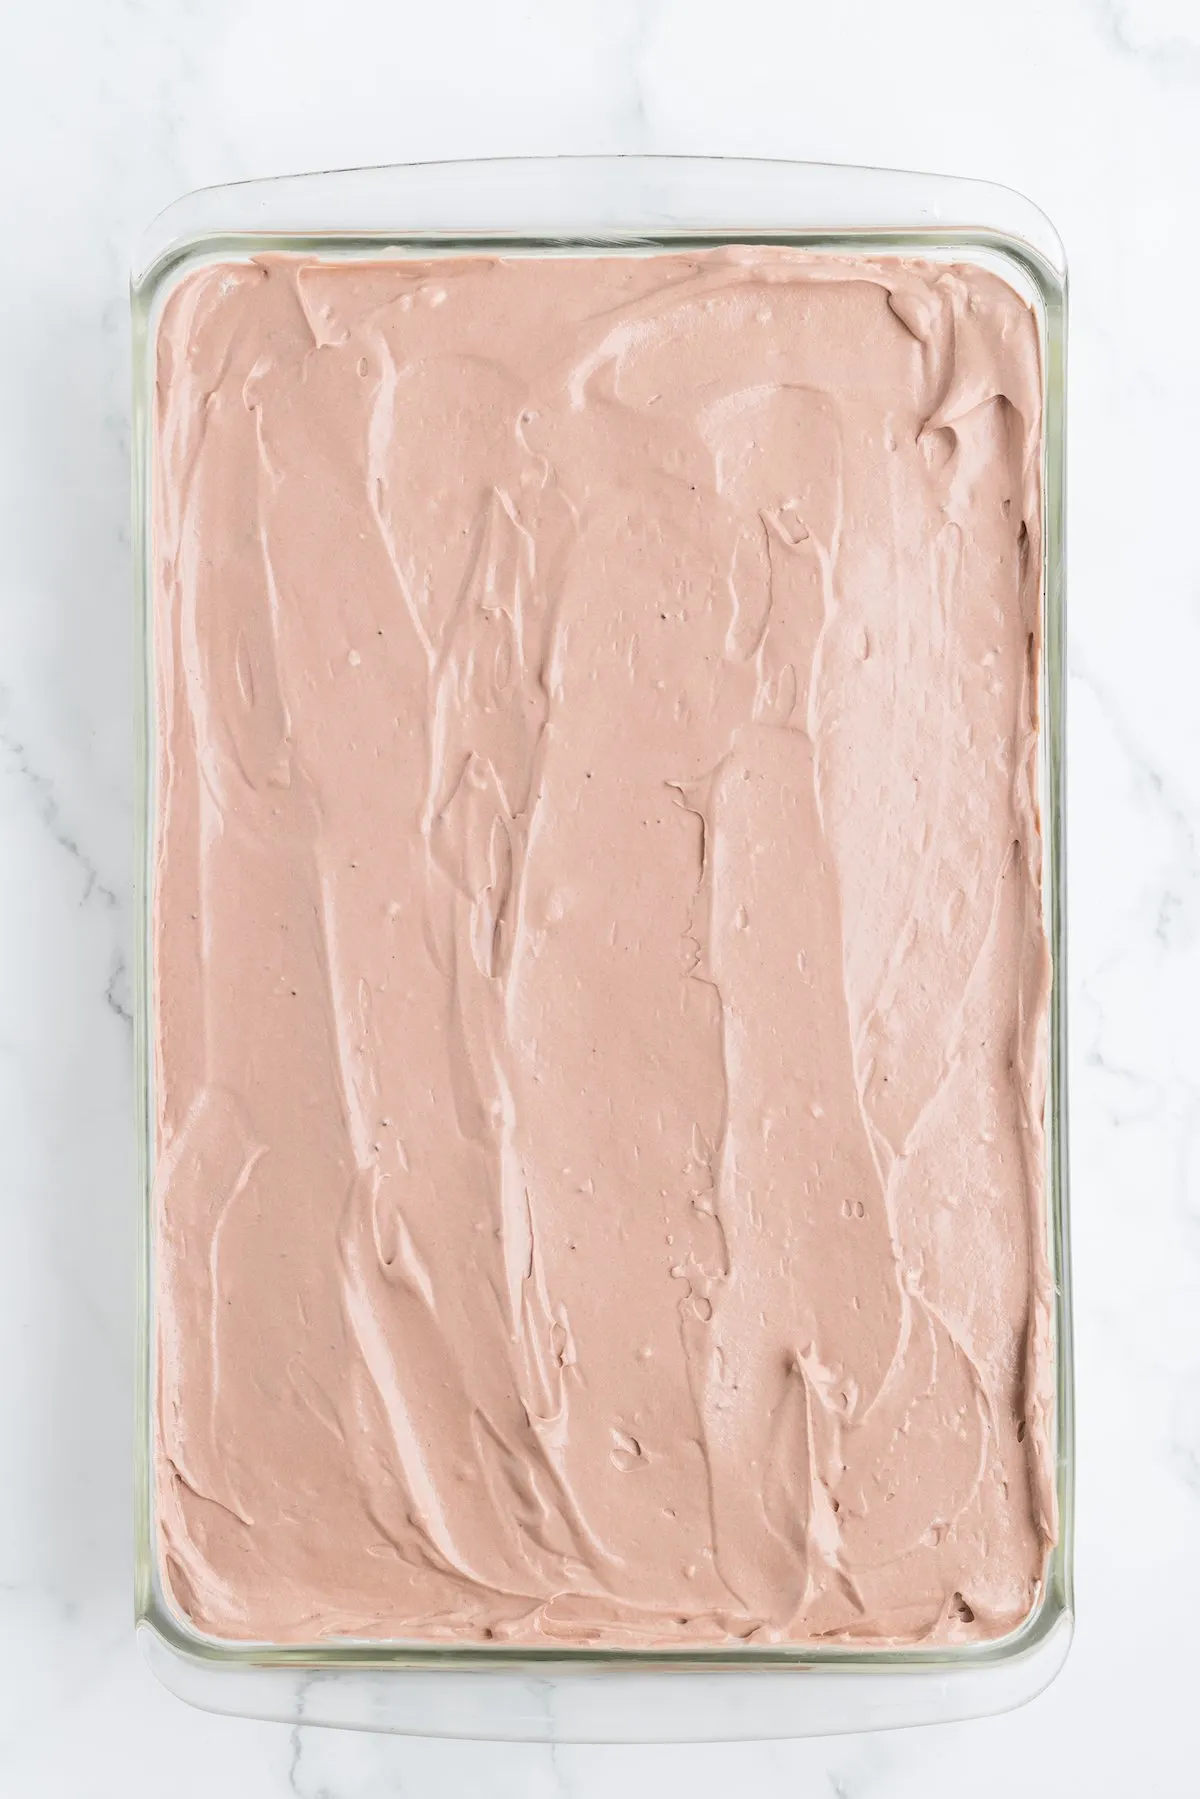 pudding chocolate layer displayed in cake pan